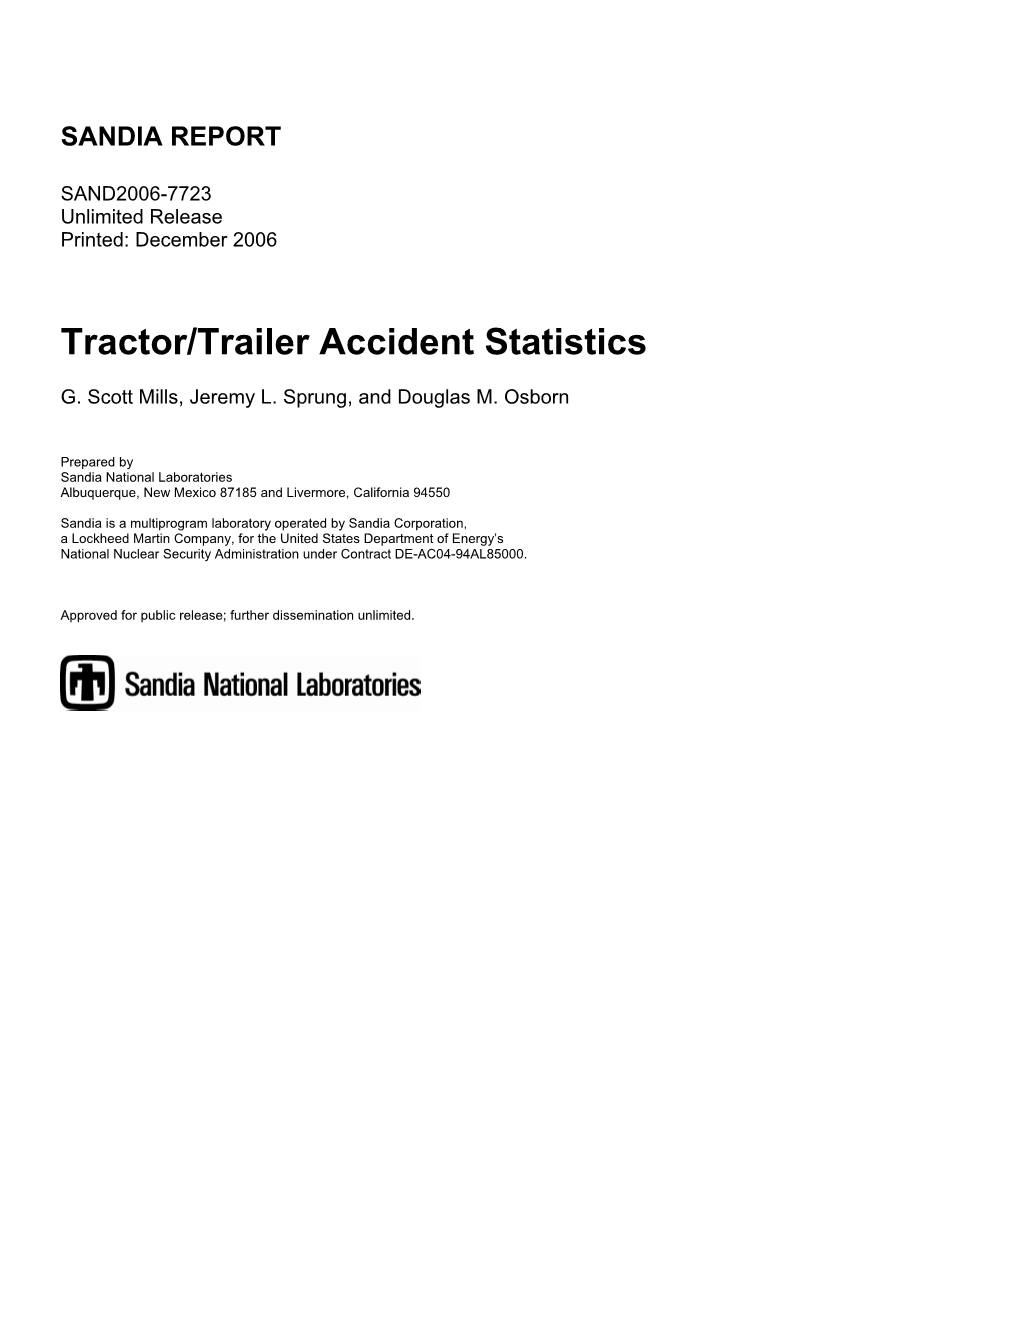 Tractor/Trailer Accident Statistics